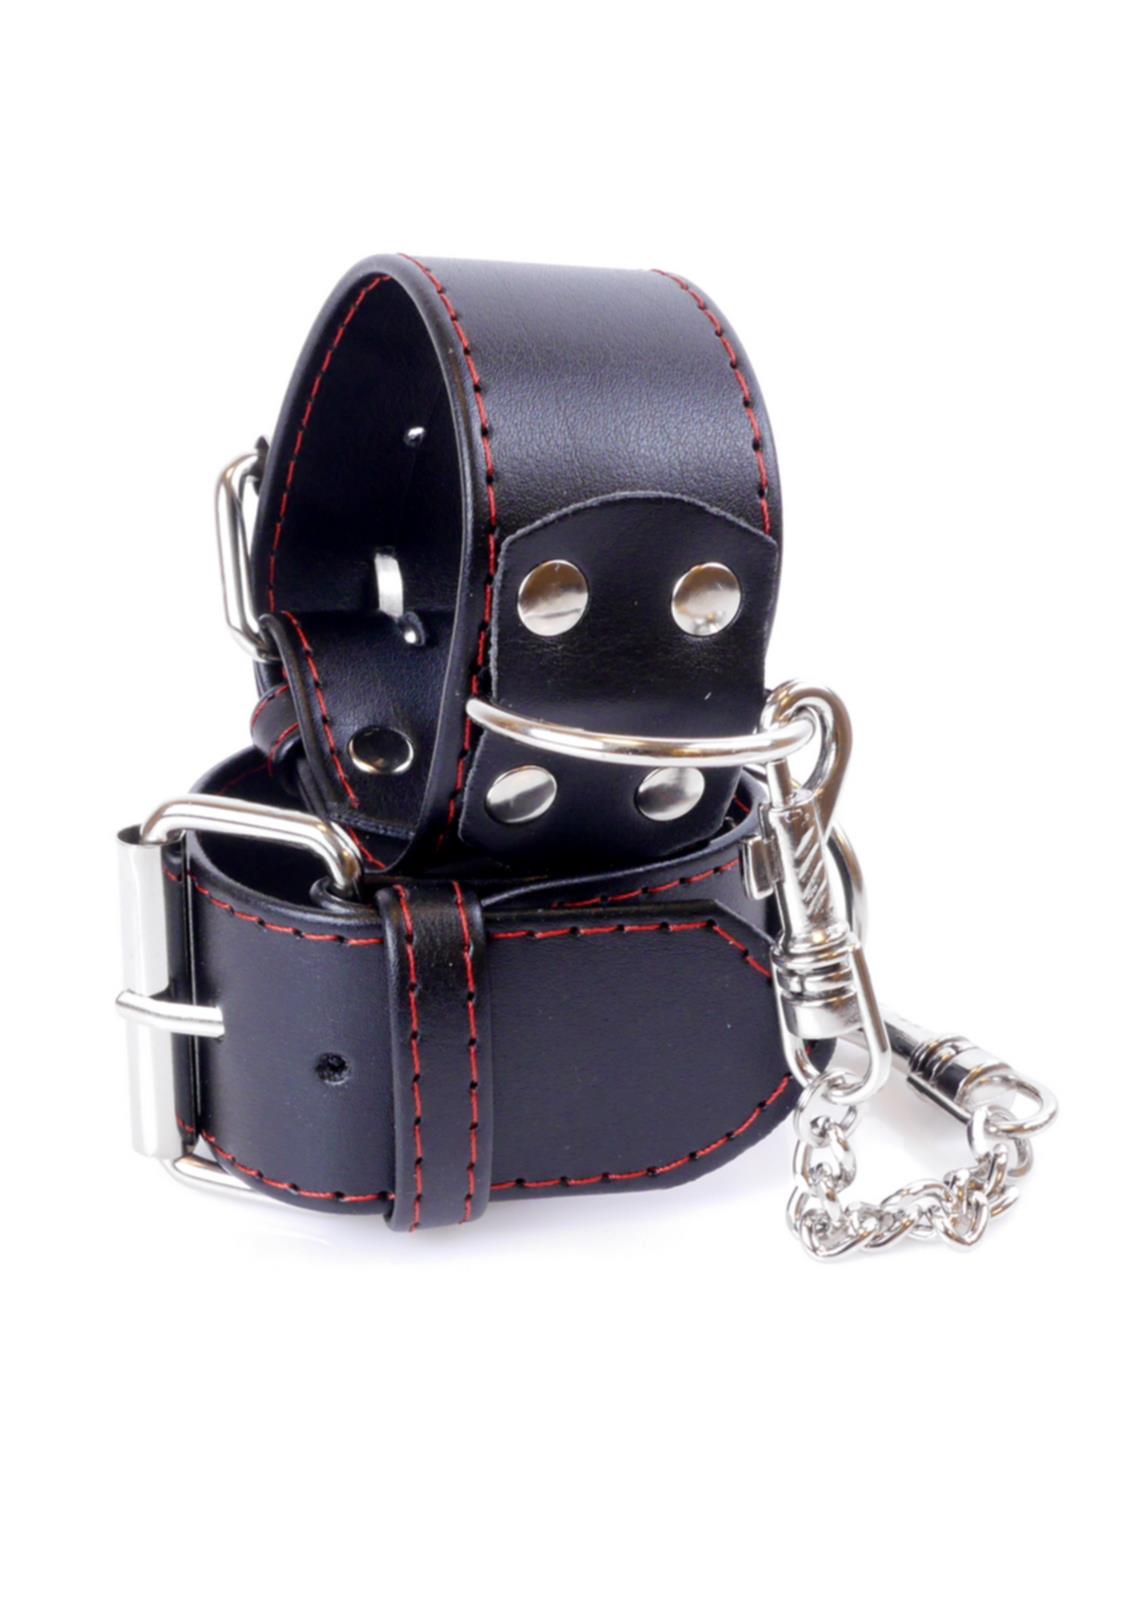 Bossoftoys - 33-00115 - Handcuffs - Studs - Wristcuffs  - 4 cm  - Red line